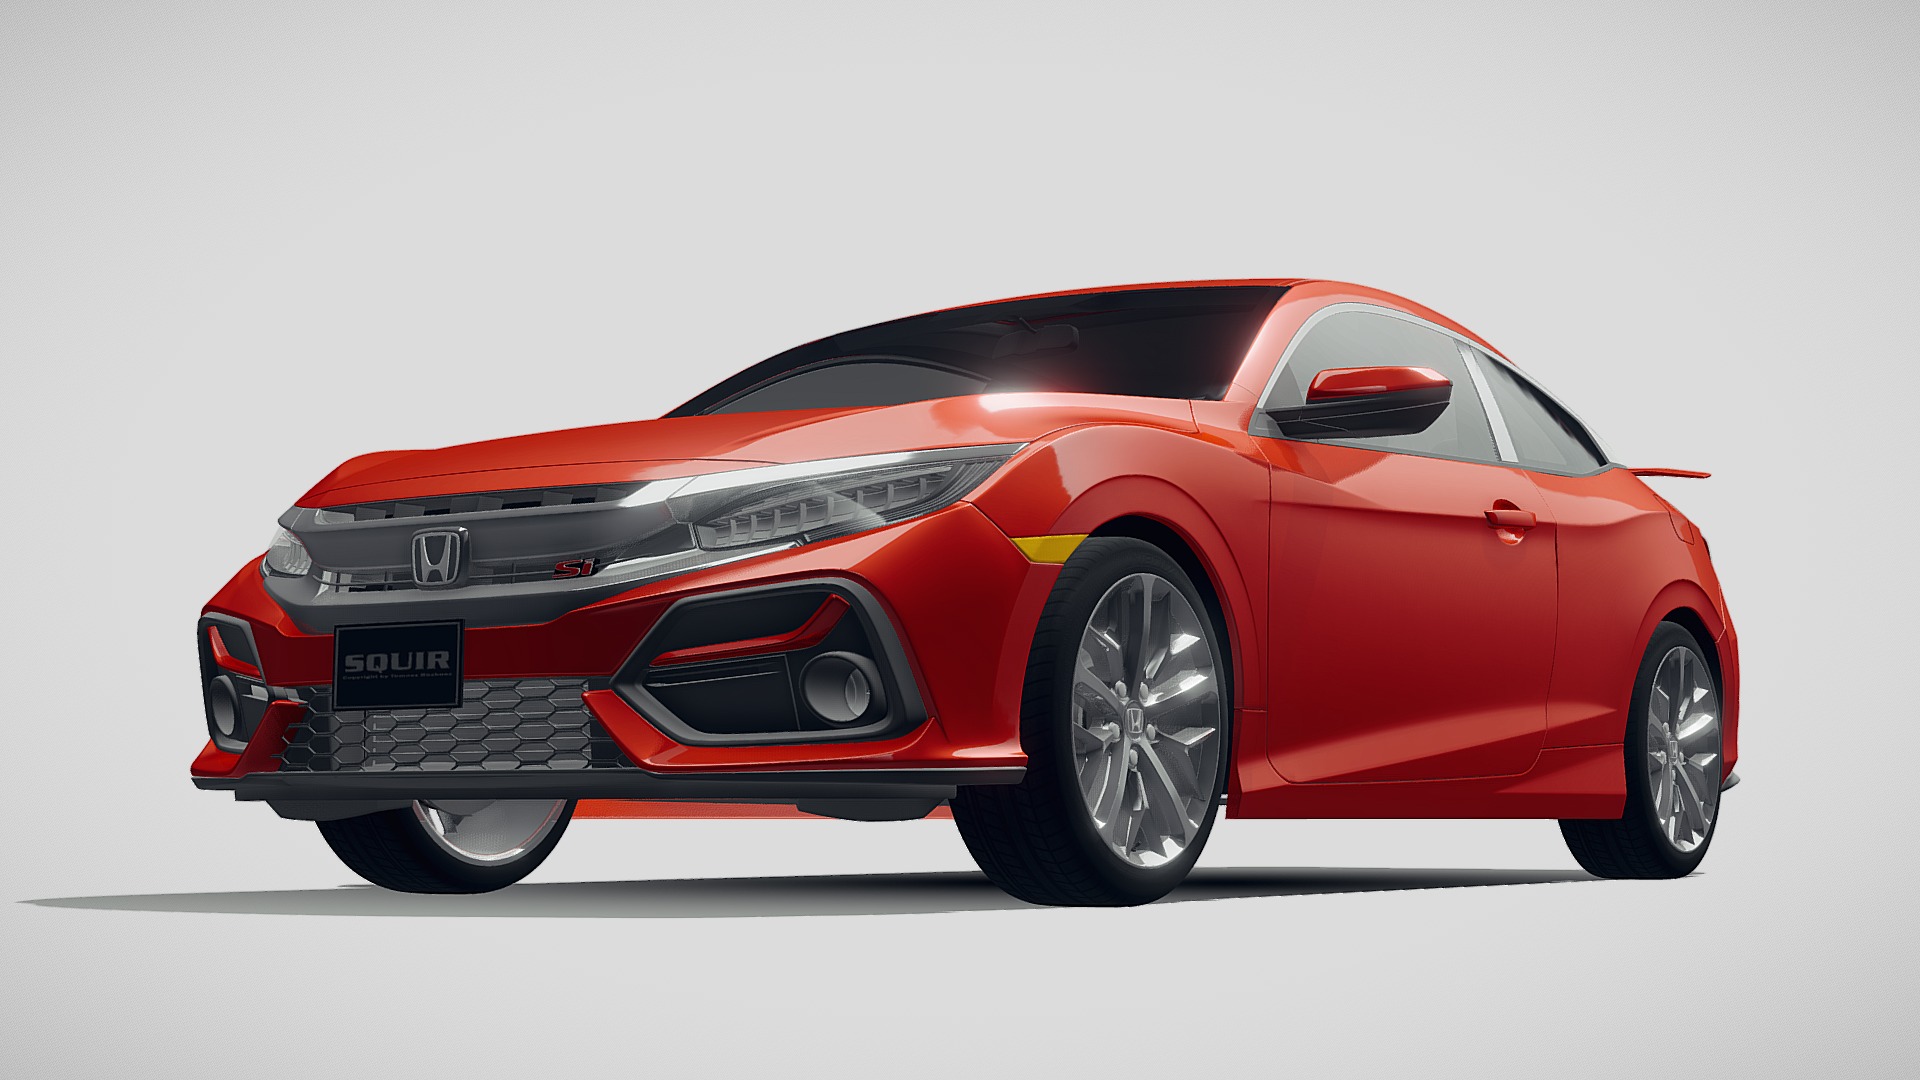 3D model Honda Civic Si Sedan 2020 - This is a 3D model of the Honda Civic Si Sedan 2020. The 3D model is about a red sports car.